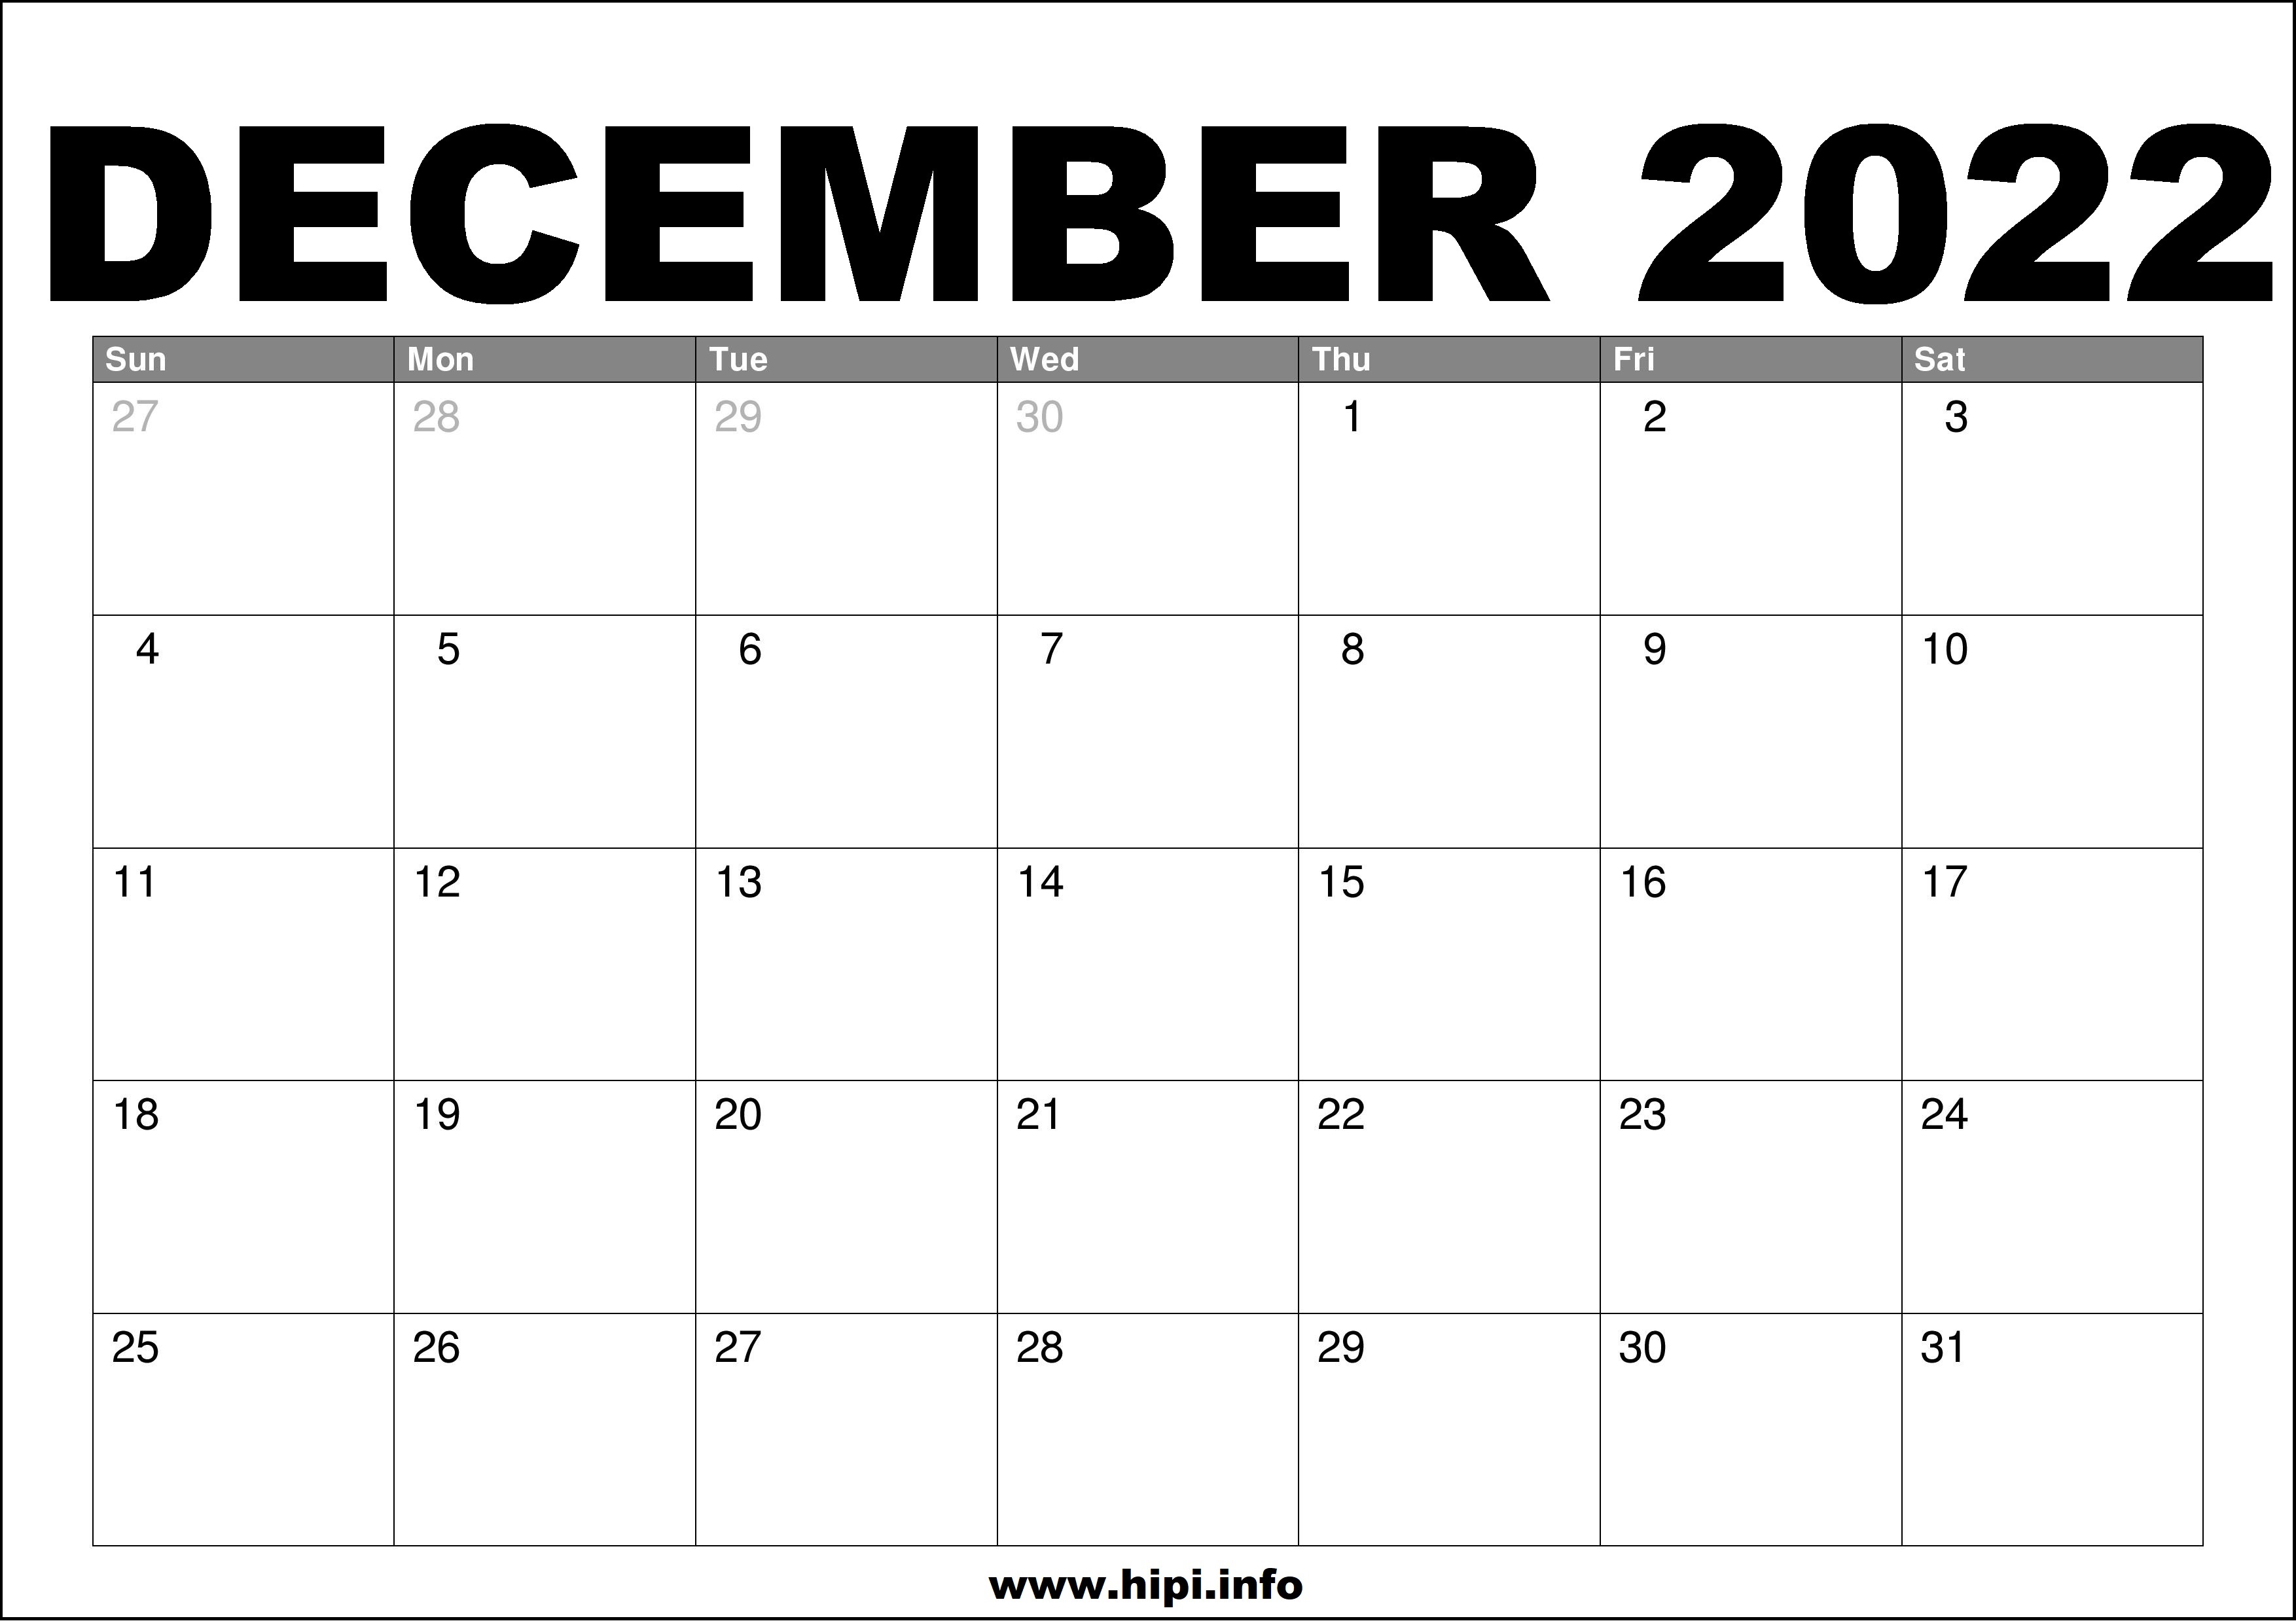 December Printable Calendar 2022 December 2022 Calendar Printable Free - Hipi.info | Calendars Printable Free